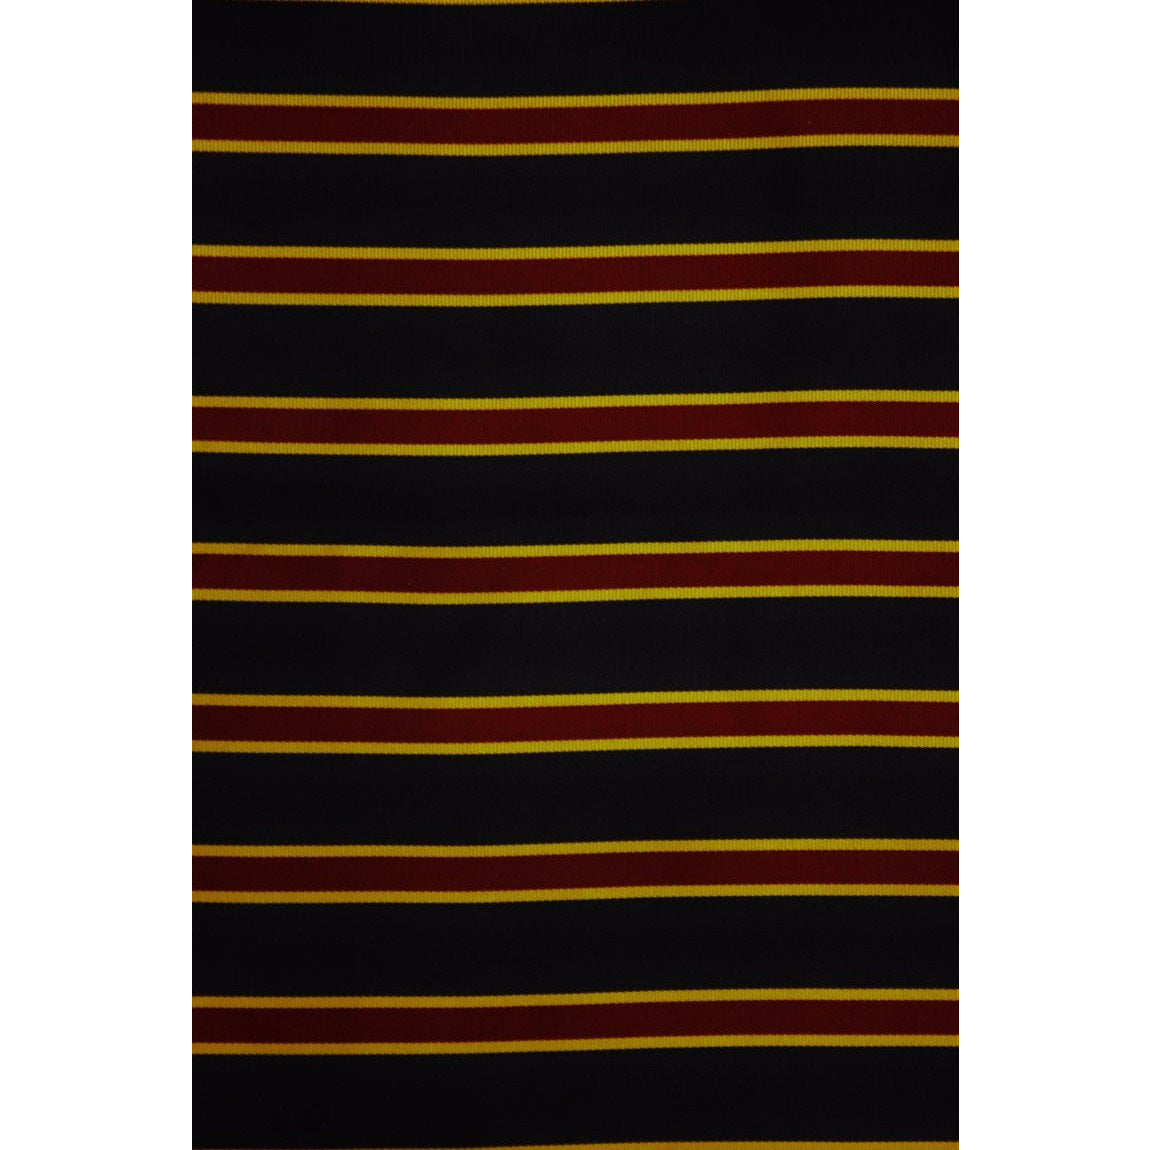 Brooks Brothers English Silk Neckwear Fabric w/ Navy, Gold & Maroon Regimental Stripes